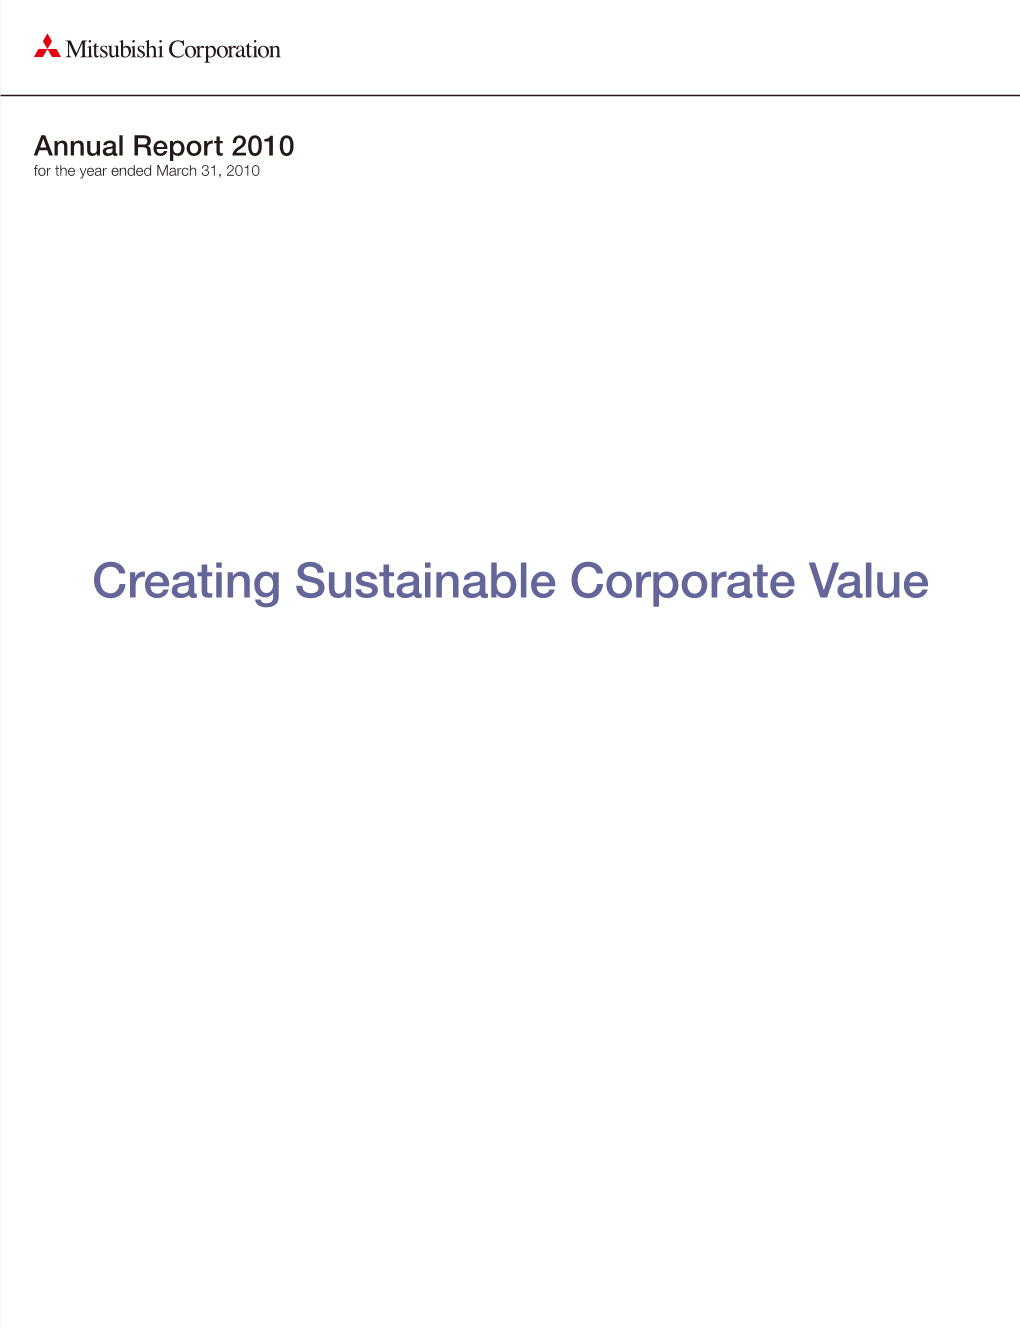 Annual Report 2010 Download (PDF:5.6MB)